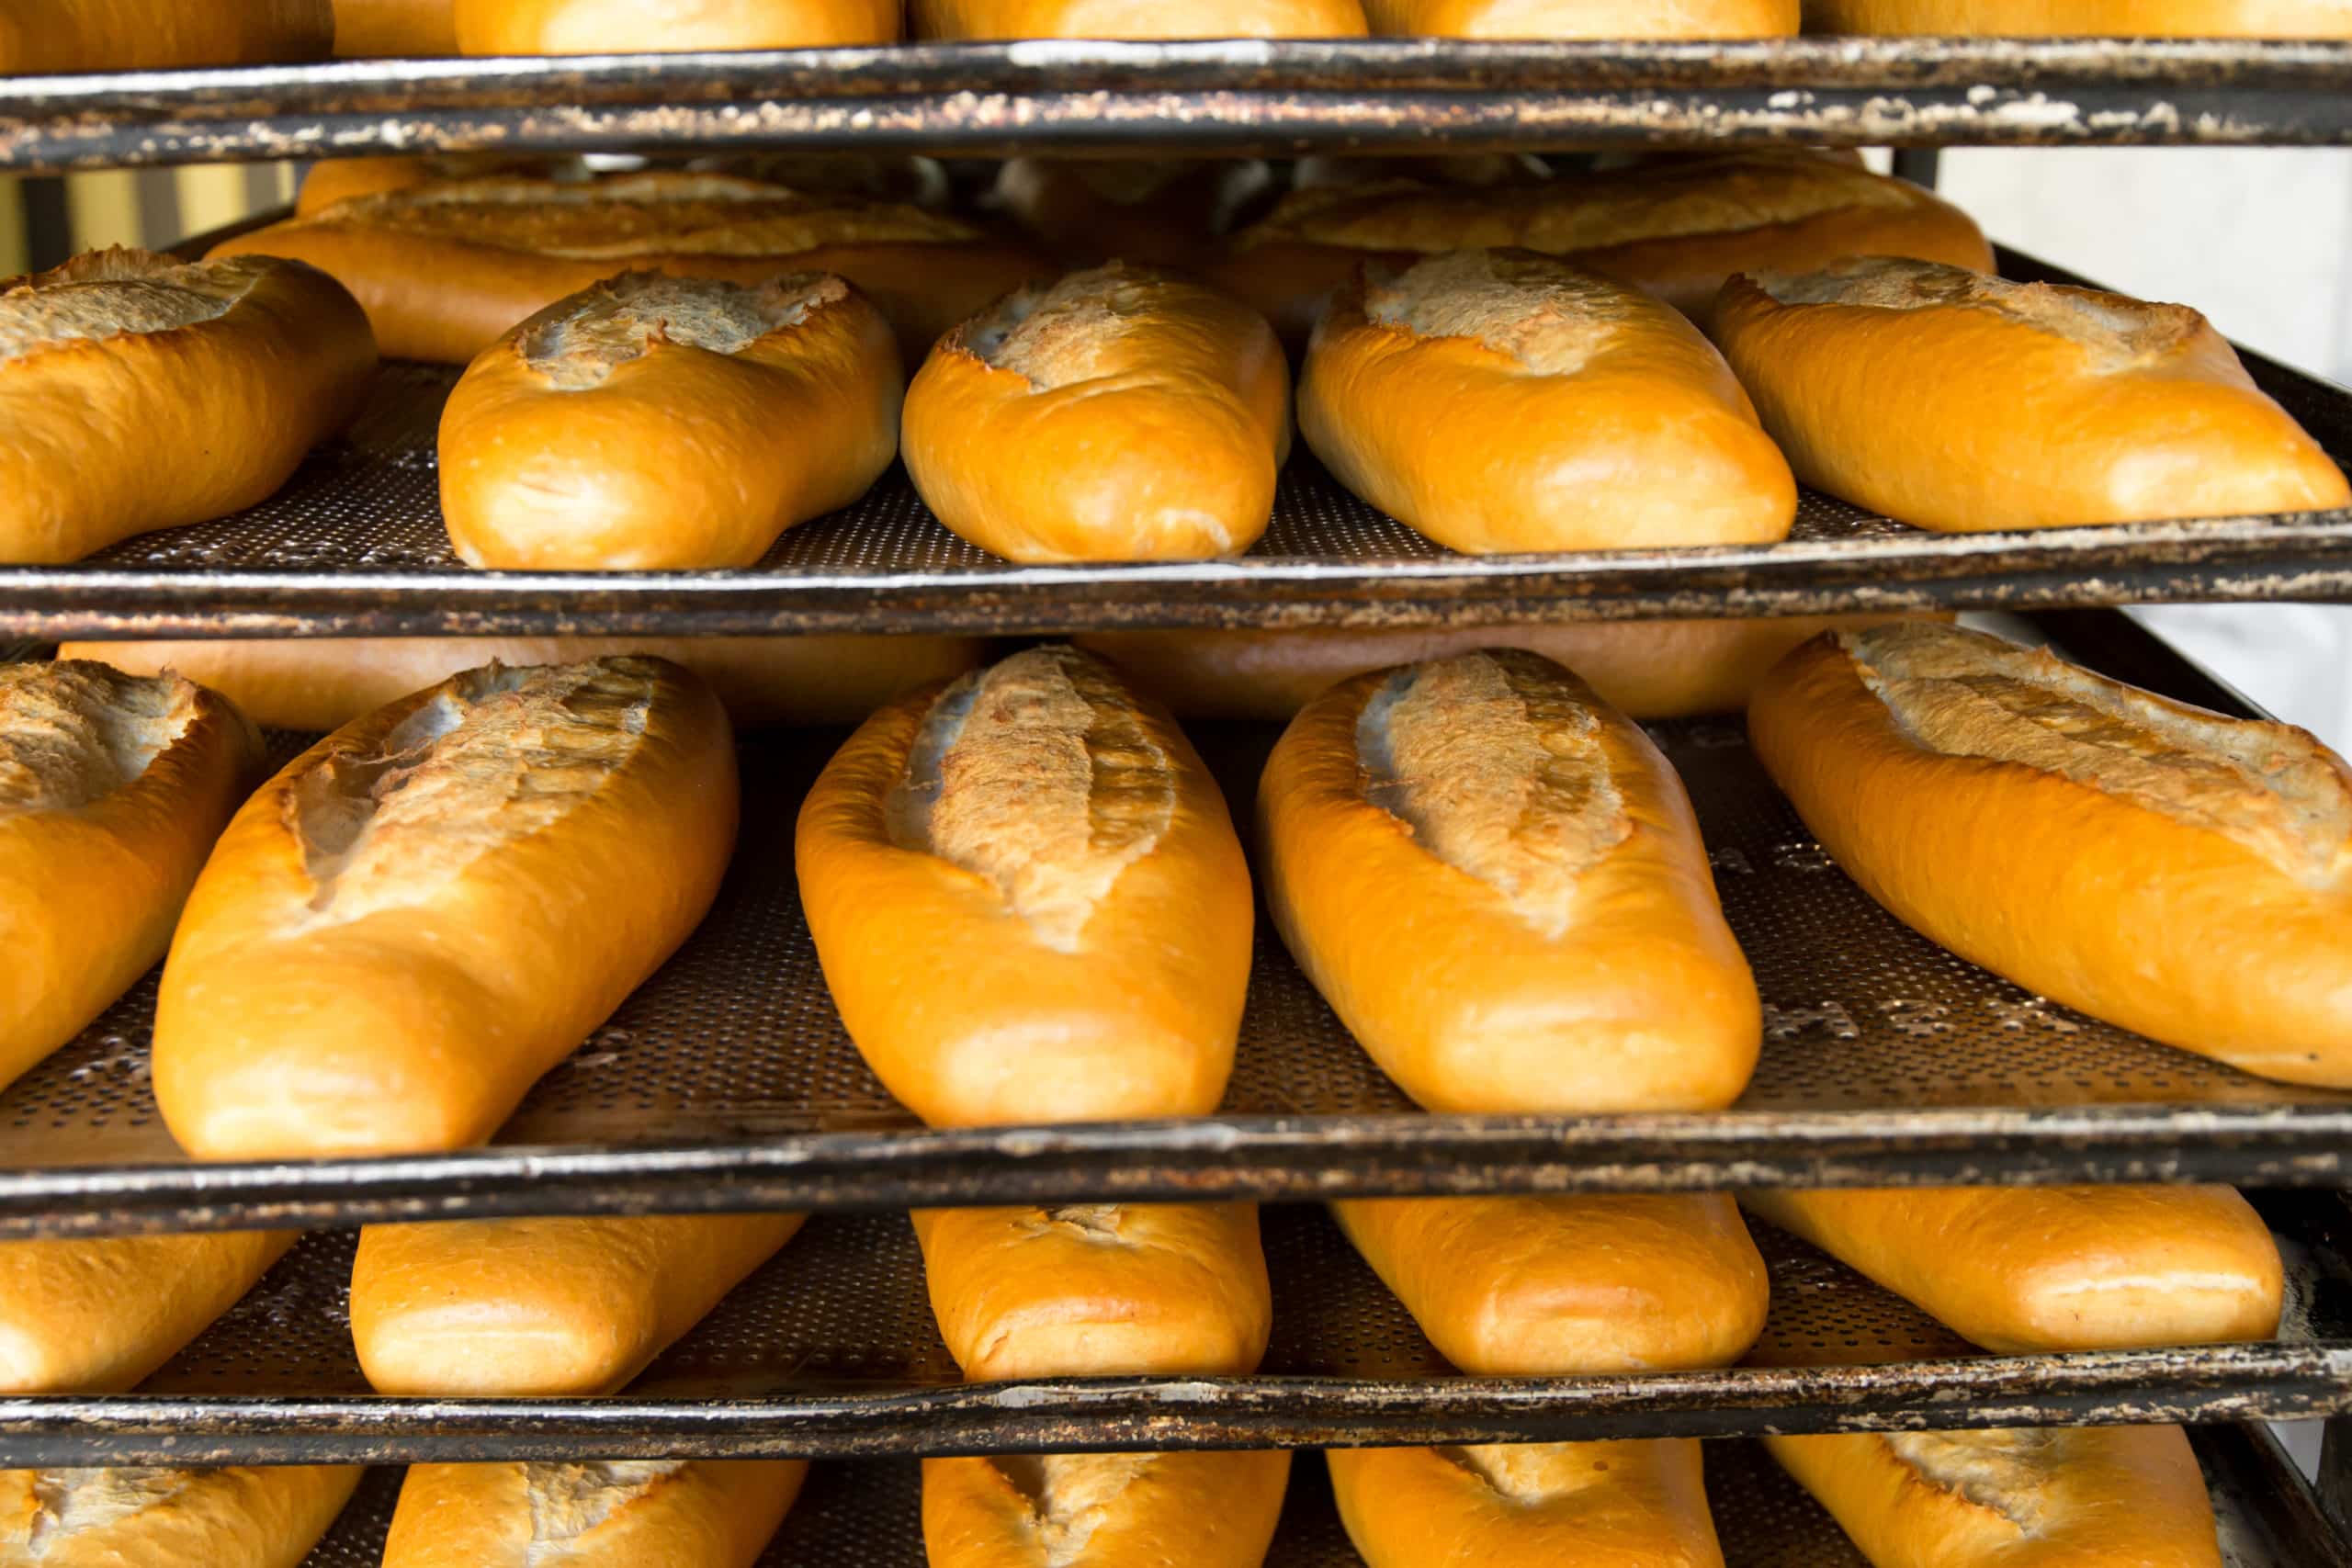 Bread at a wholesale baking facility